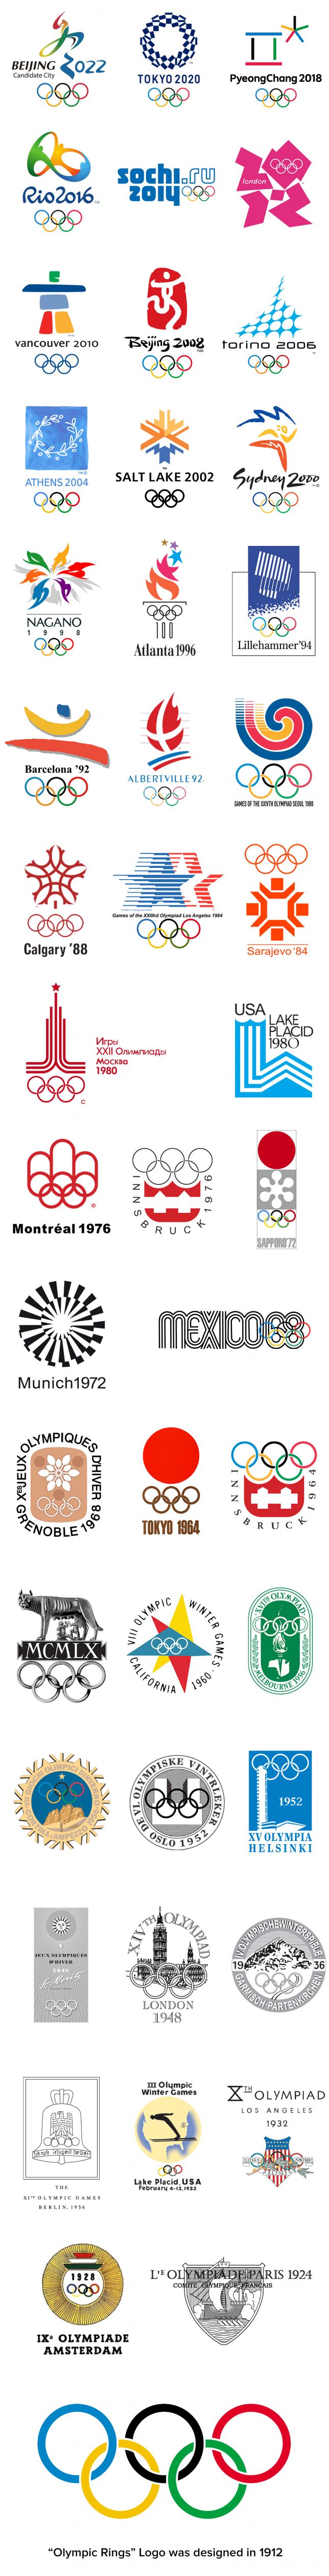 Olympic games logos